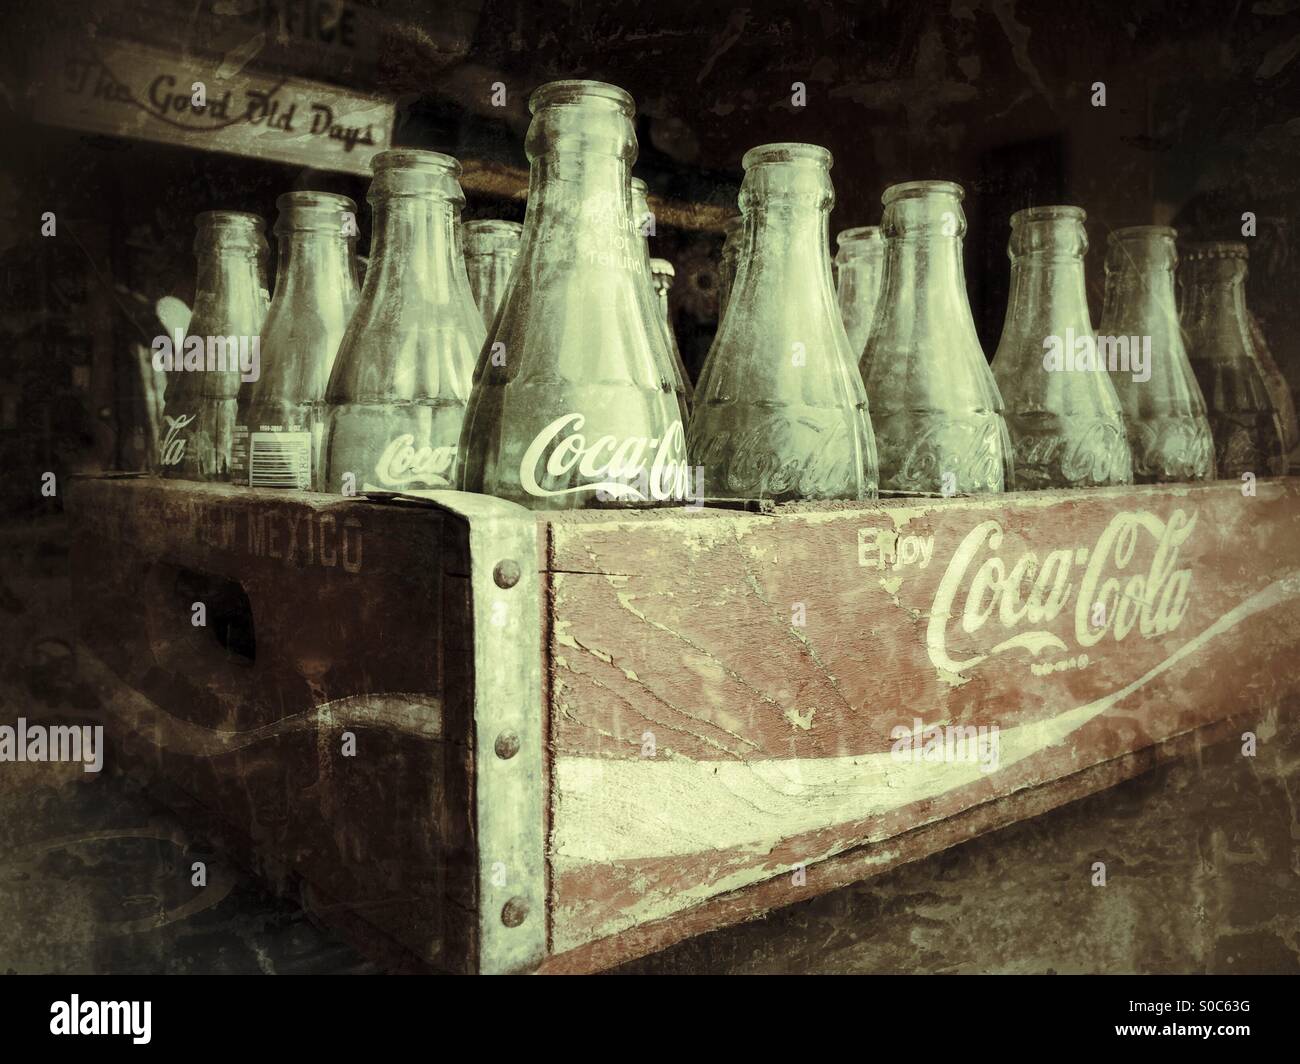 Coca Cola antique bottles Stock Photo